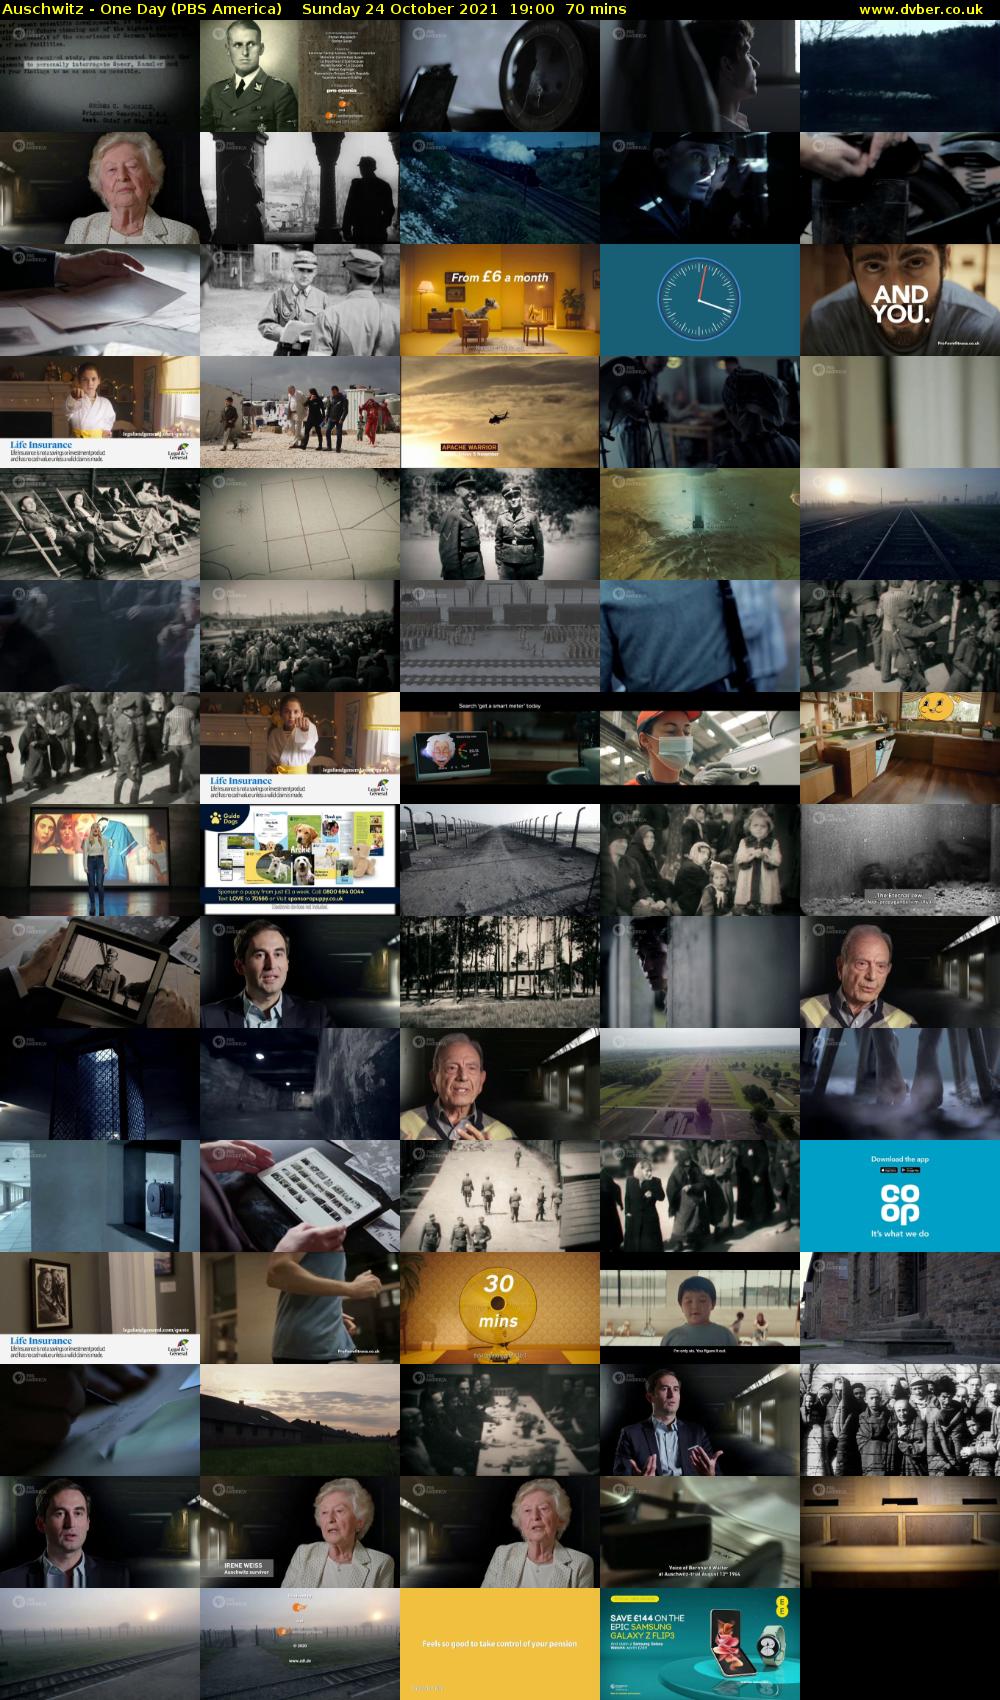 Auschwitz - One Day (PBS America) Sunday 24 October 2021 19:00 - 20:10